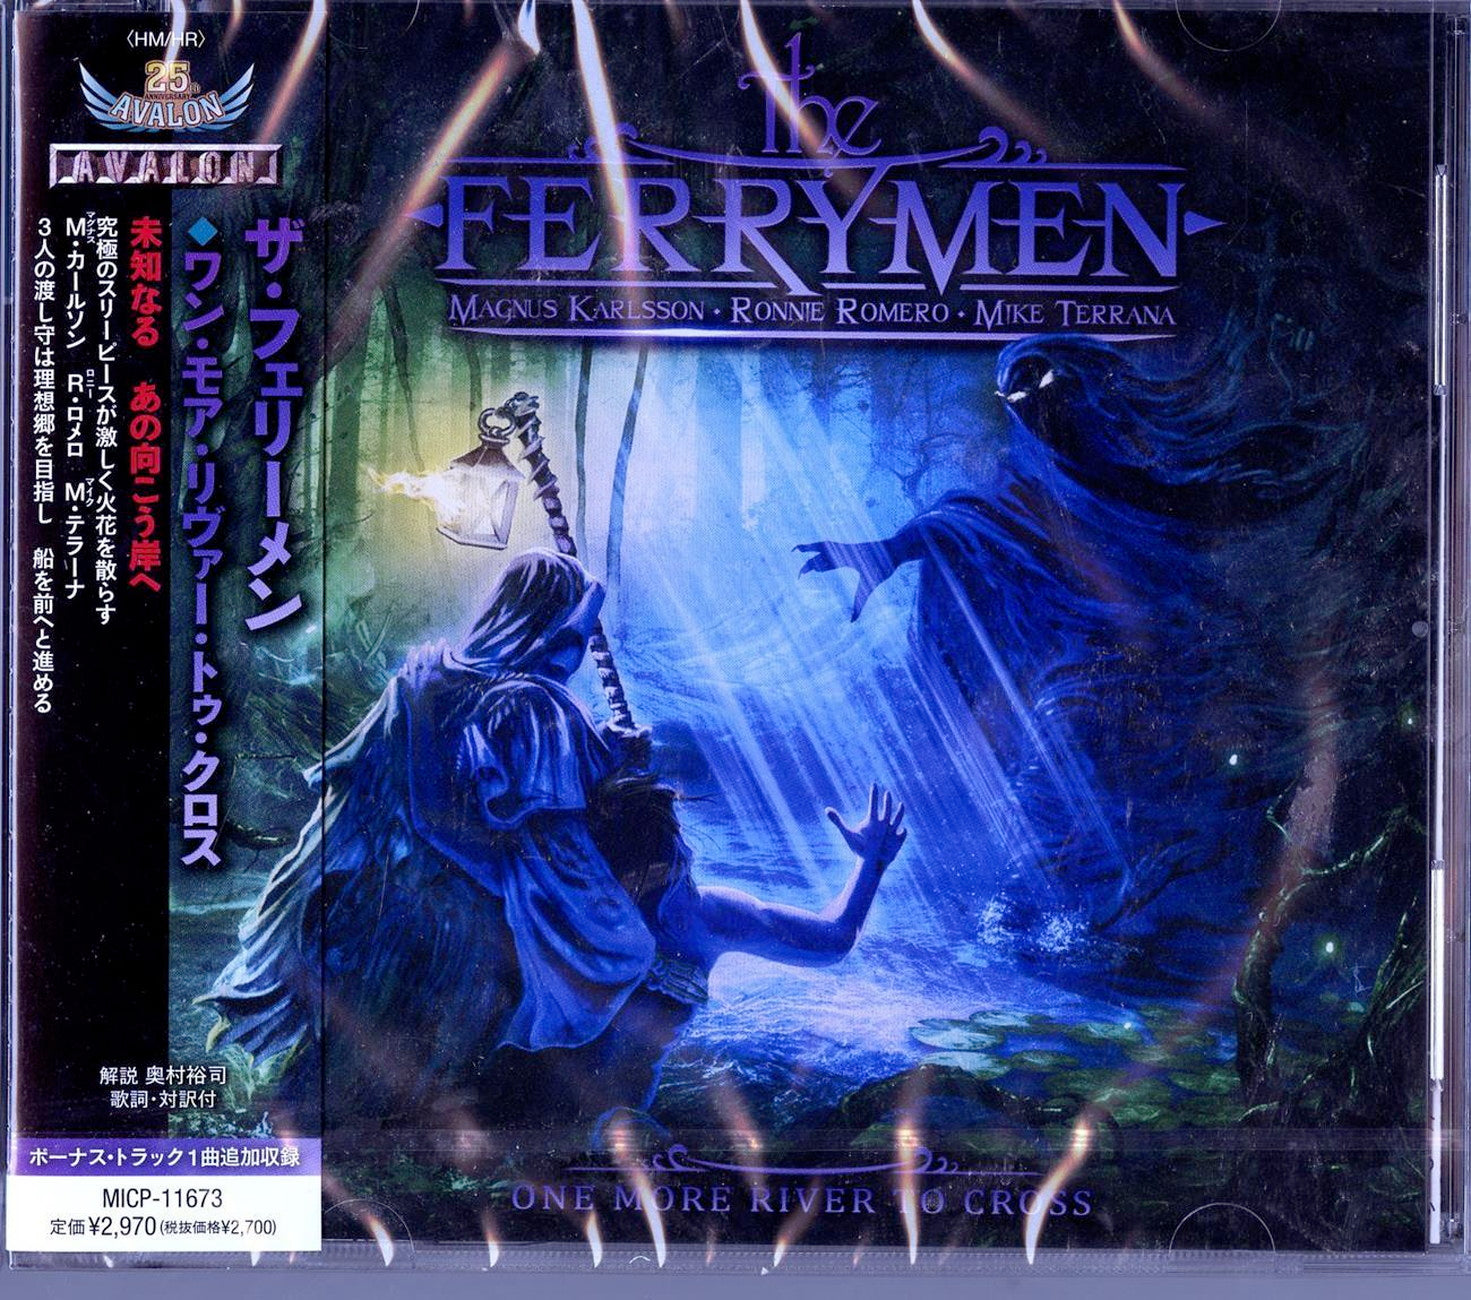 Ferrymen - One More River To Cross - Japan CD – CDs Vinyl Japan